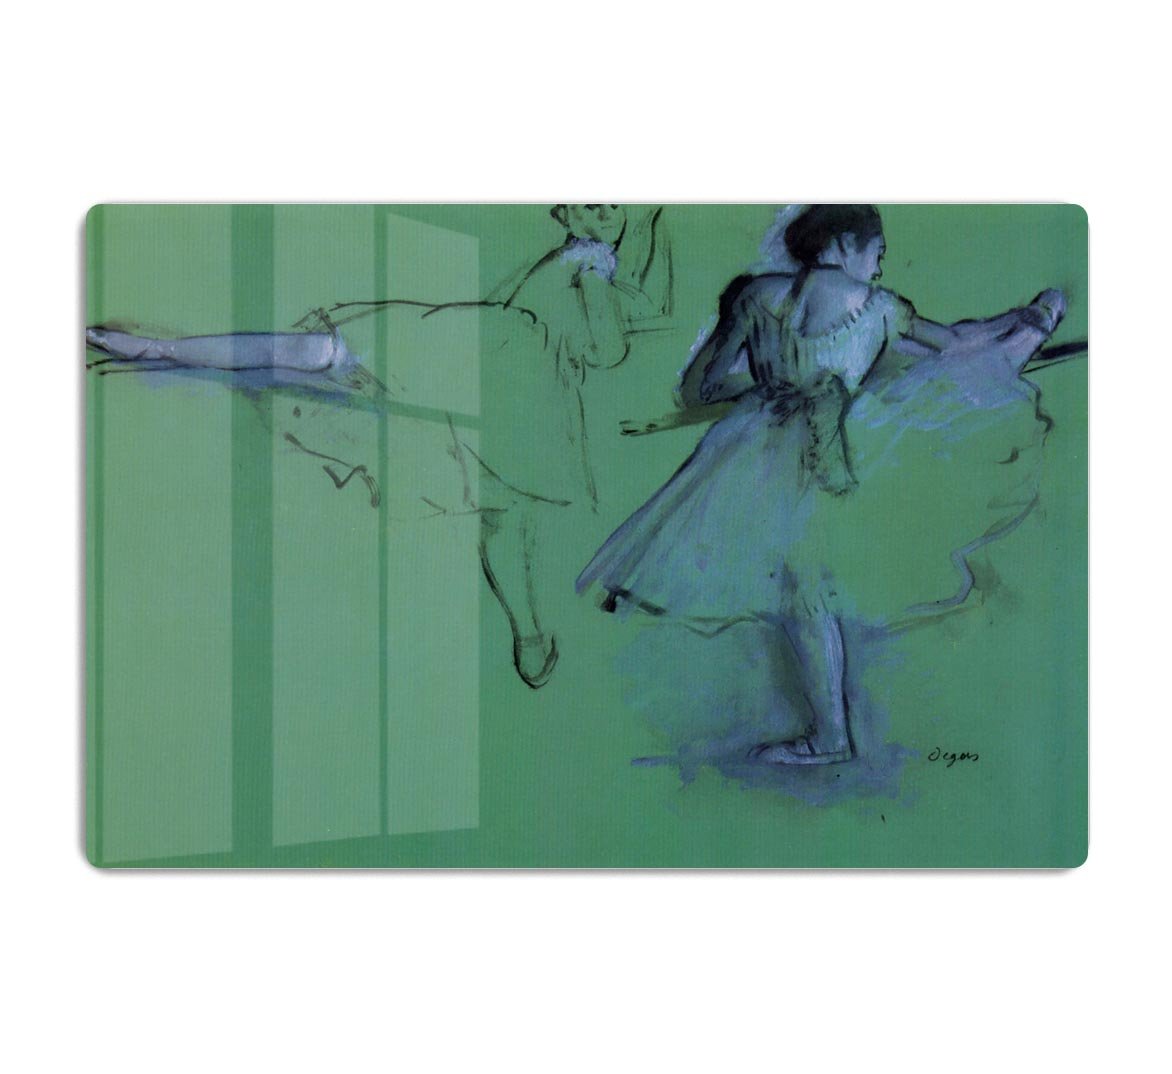 Dancers at the bar 2 by Degas HD Metal Print - Canvas Art Rocks - 1